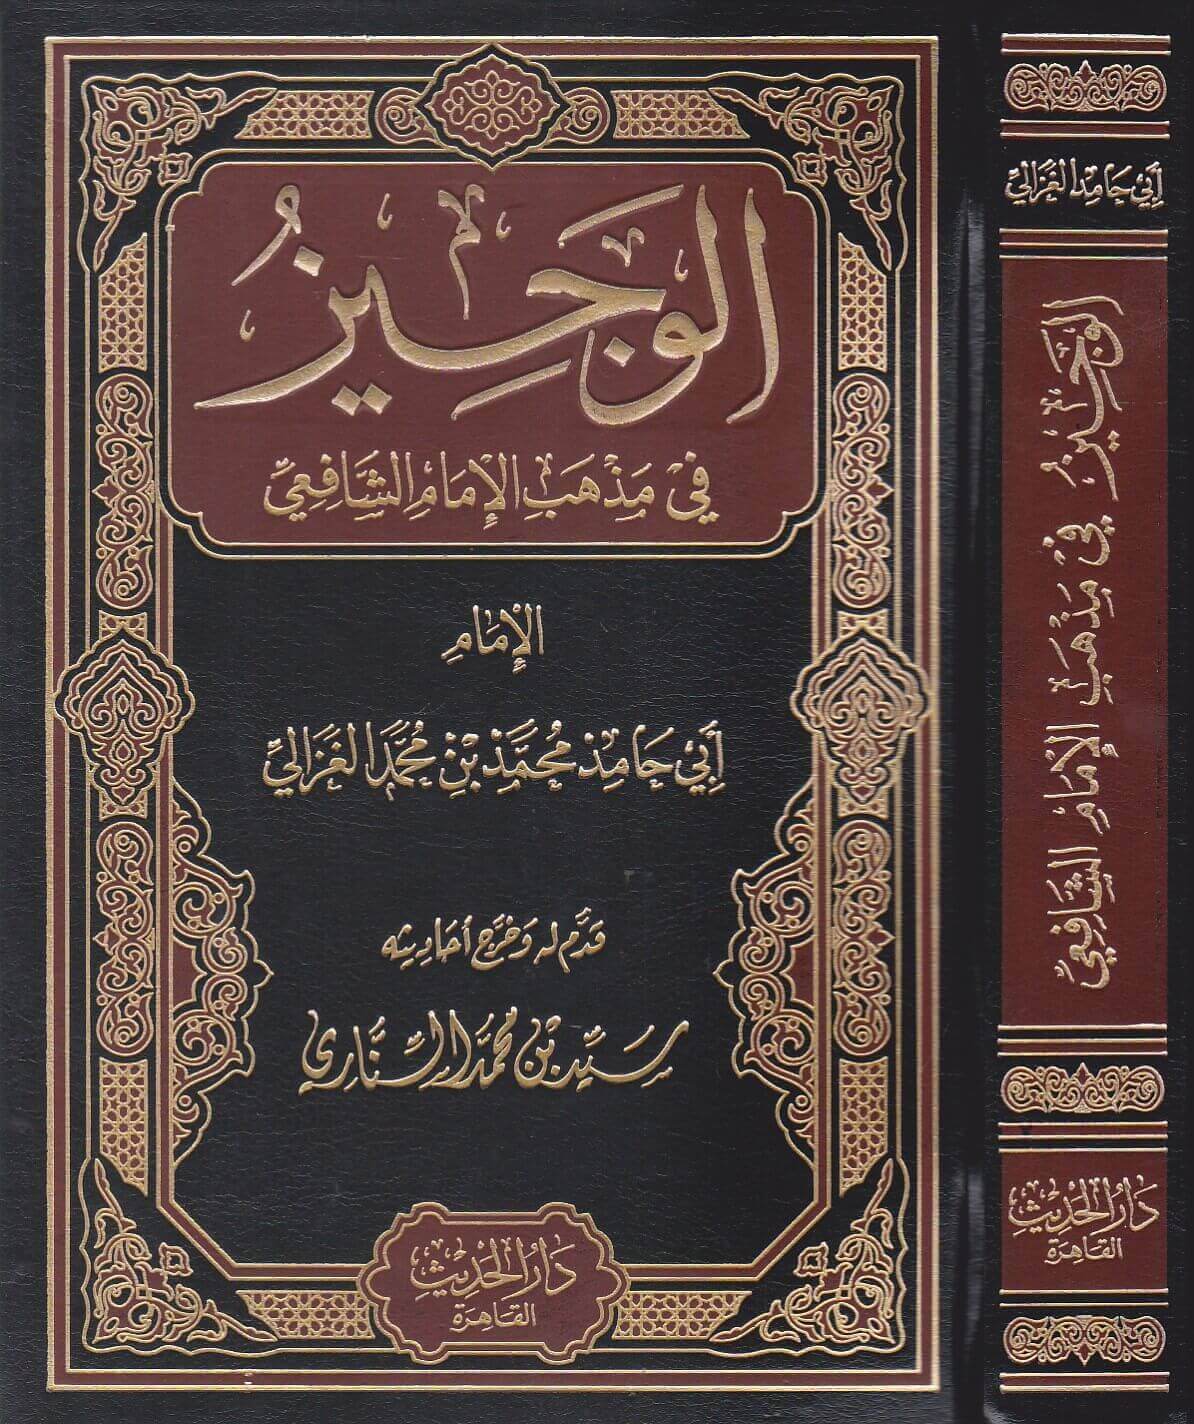 Al-Wajeez in the doctrine of Imam Shafi'i